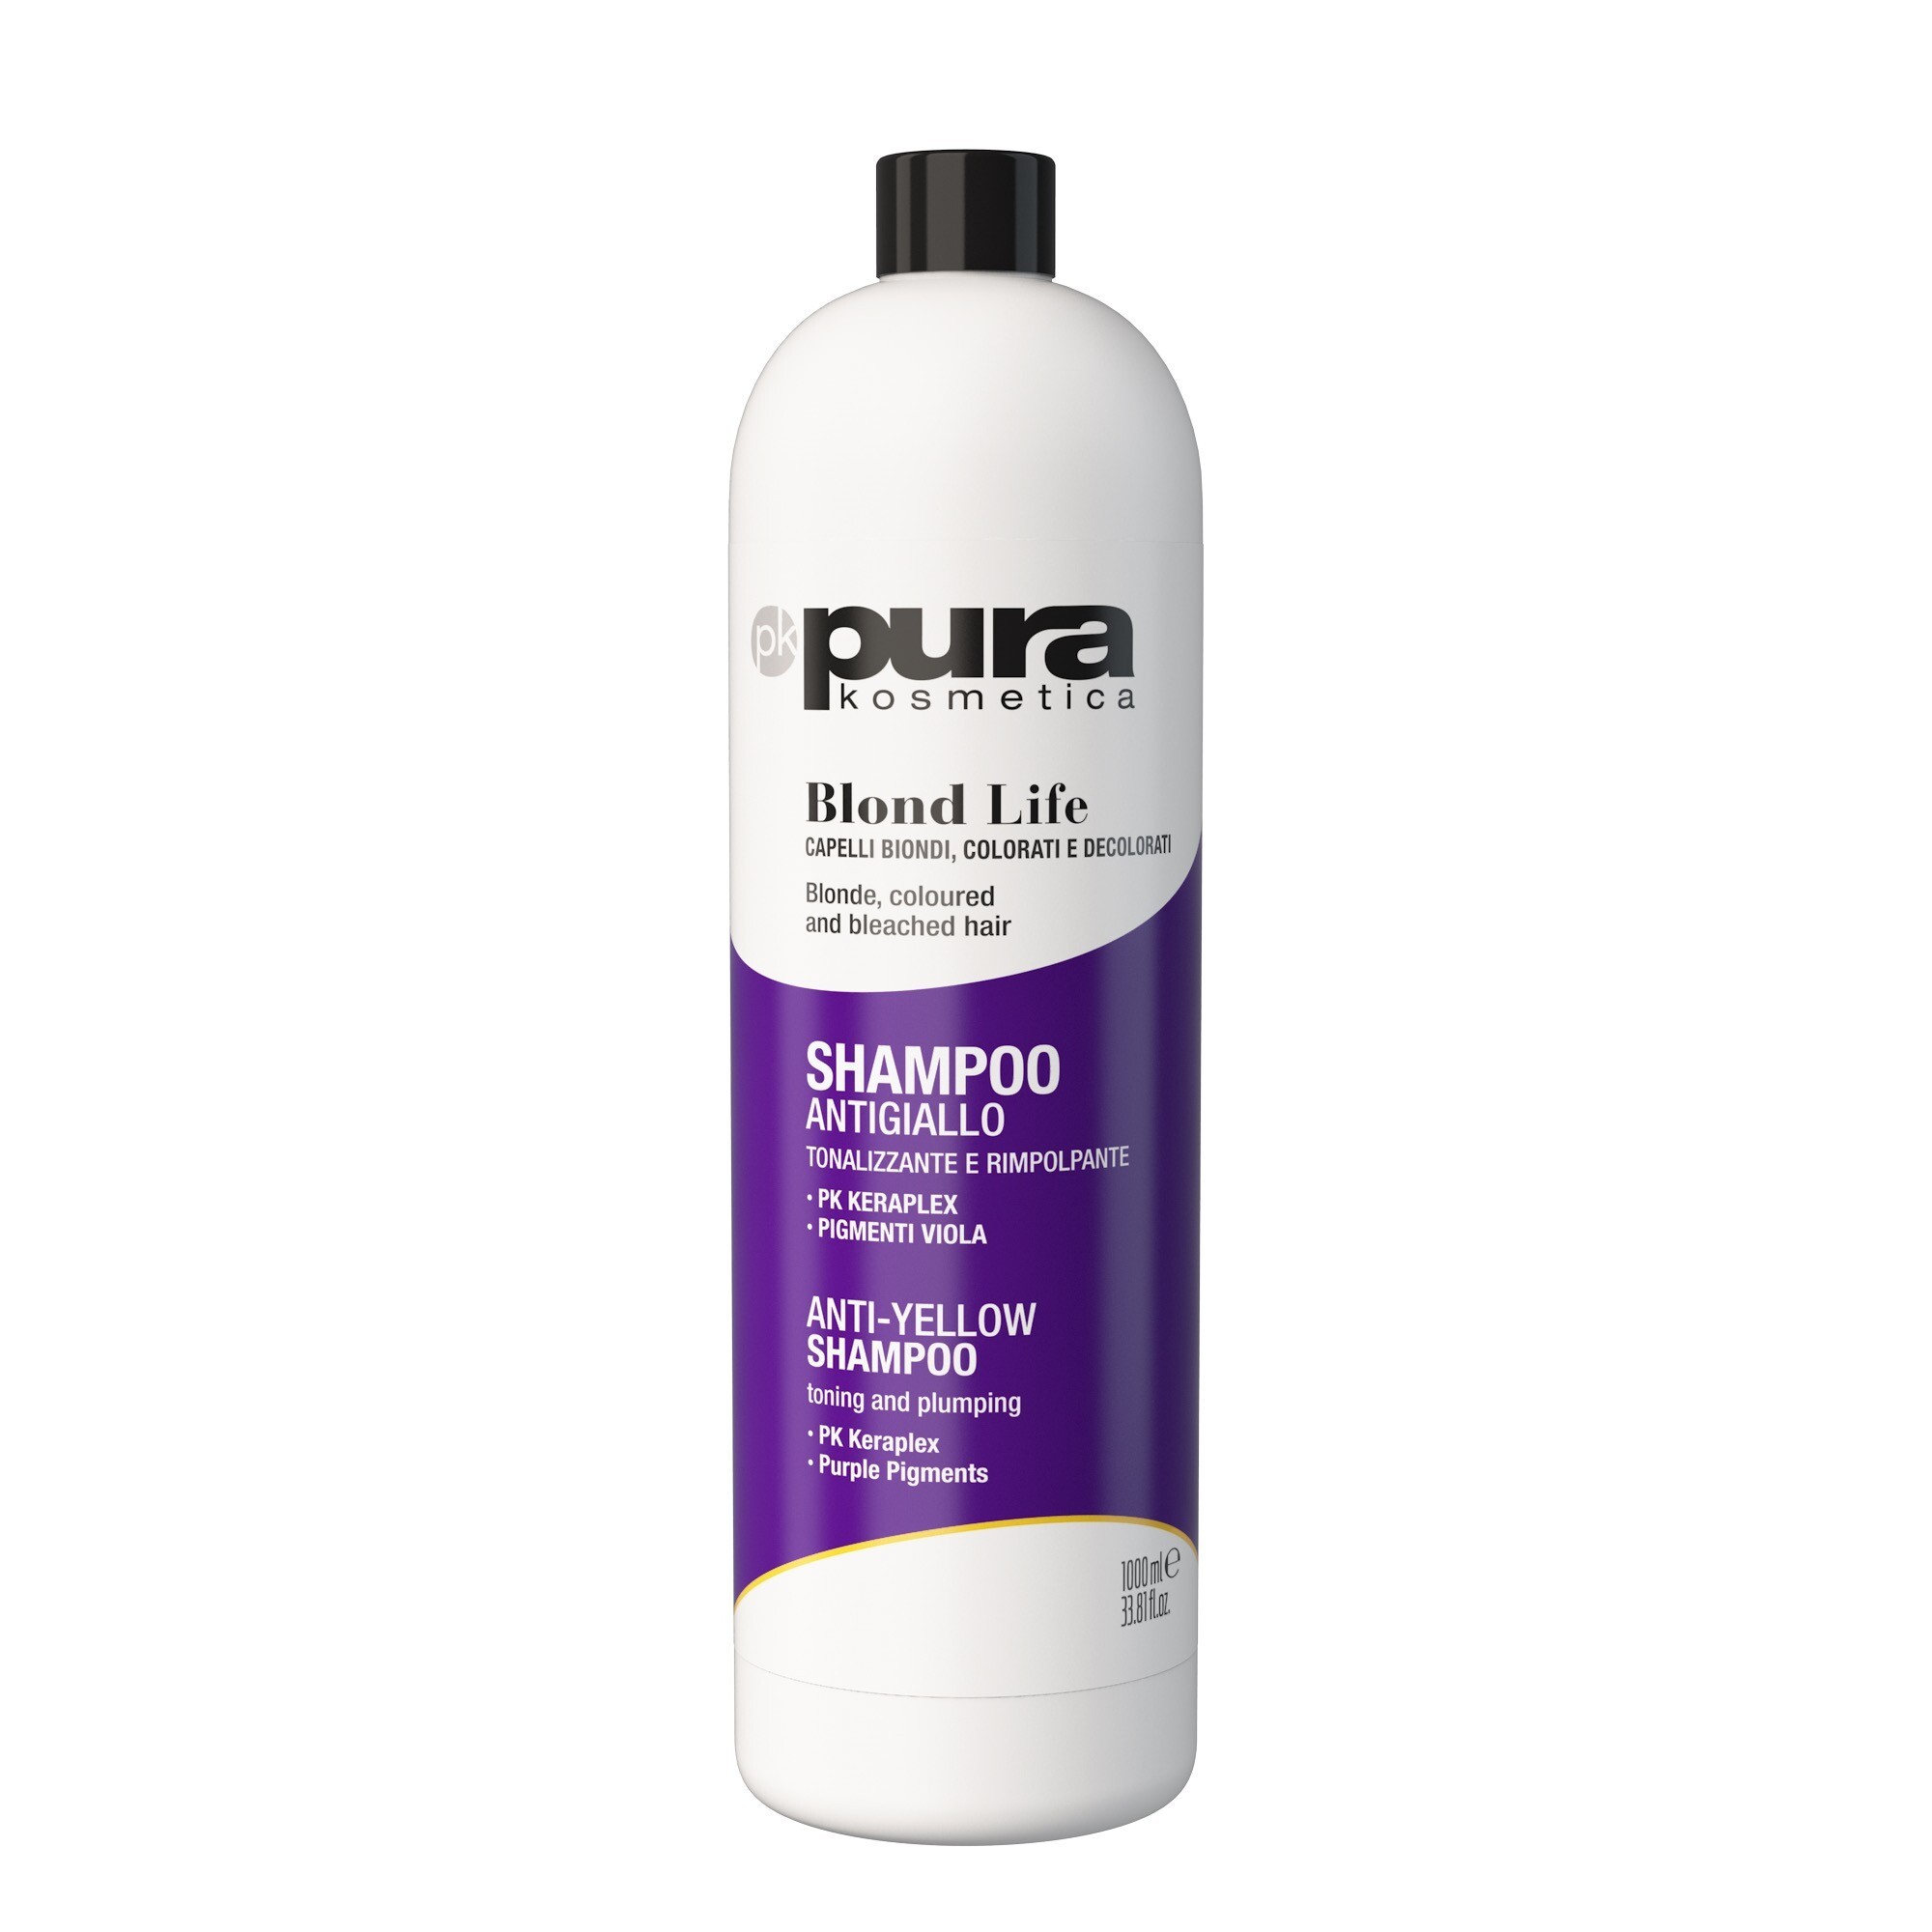 Pura Kosmetica Pure Blond Life Shampoo 1000ml